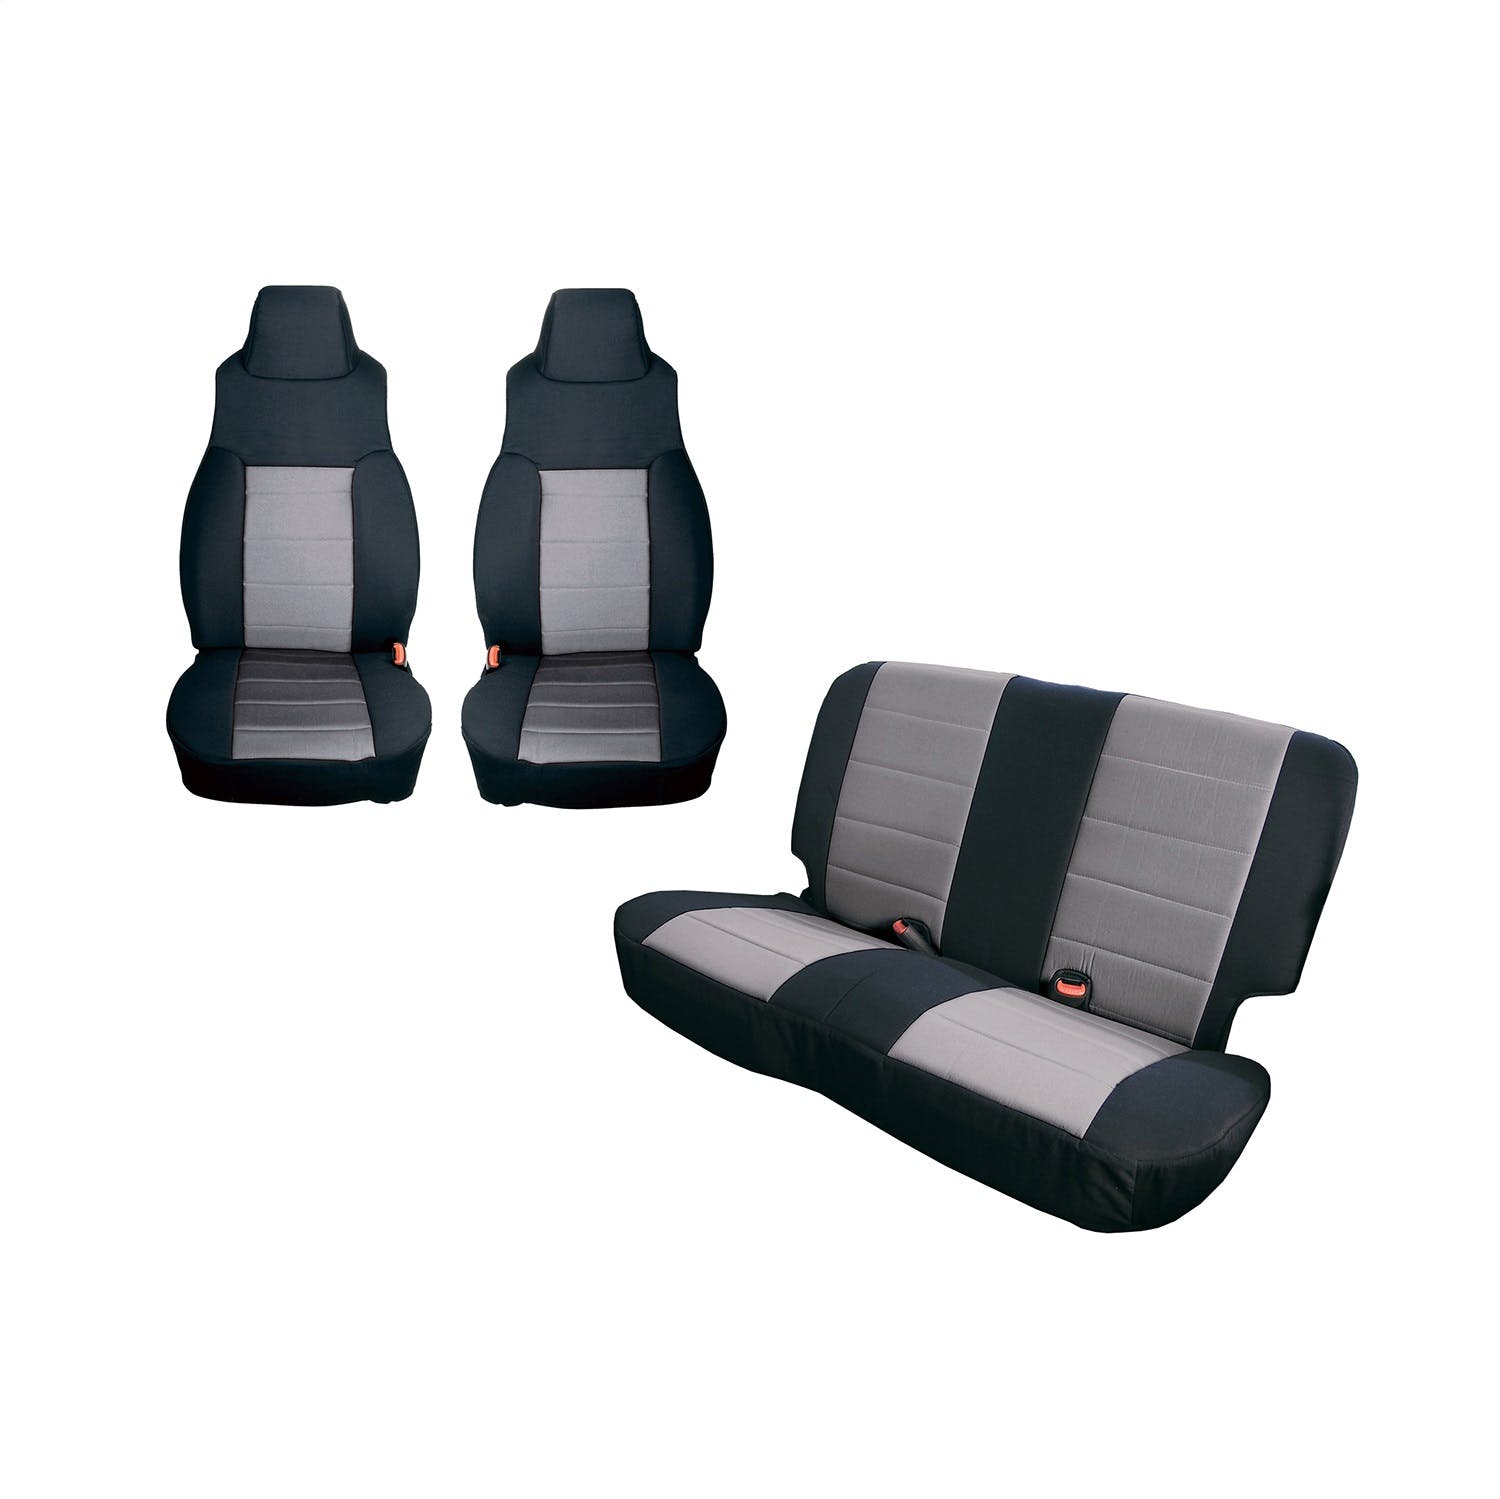 Rugged Ridge 13292.09 Seat Cover Kit, Black/Gray